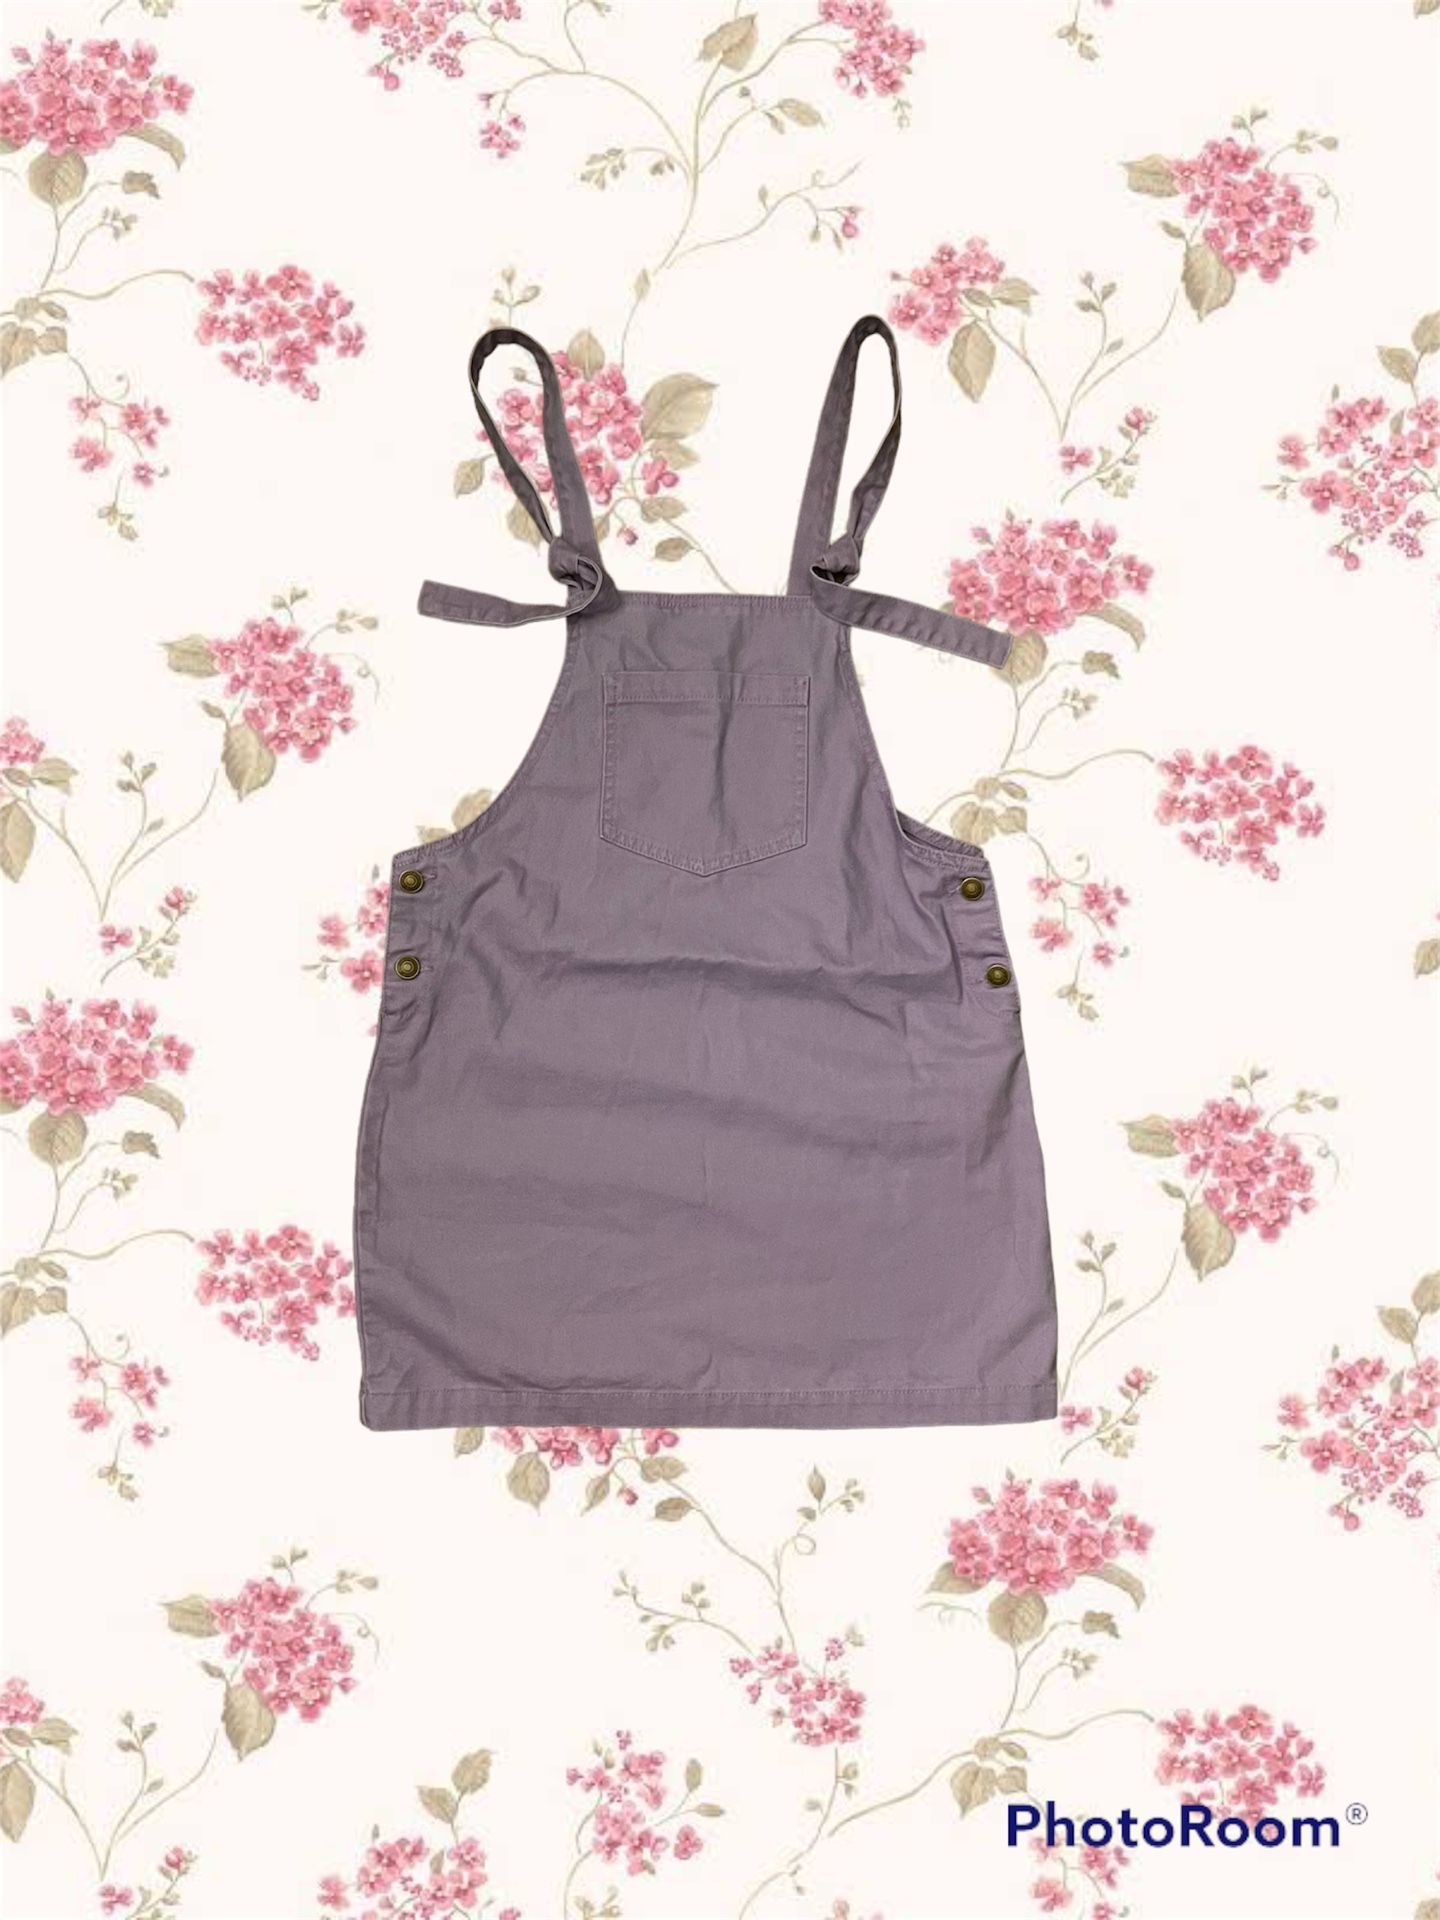 Purple Overall Skirt